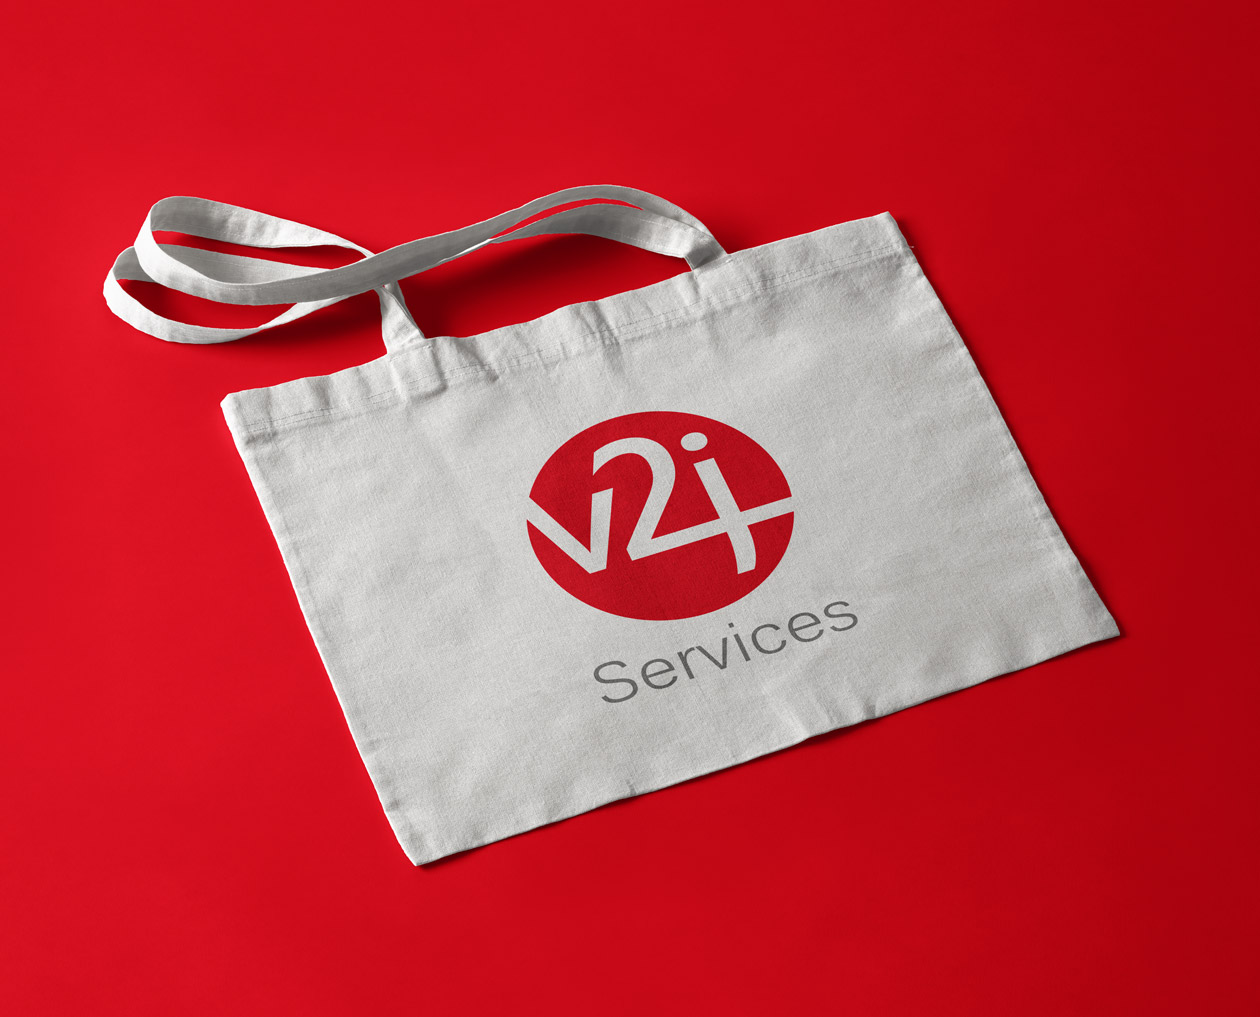 logo design v2j services 07